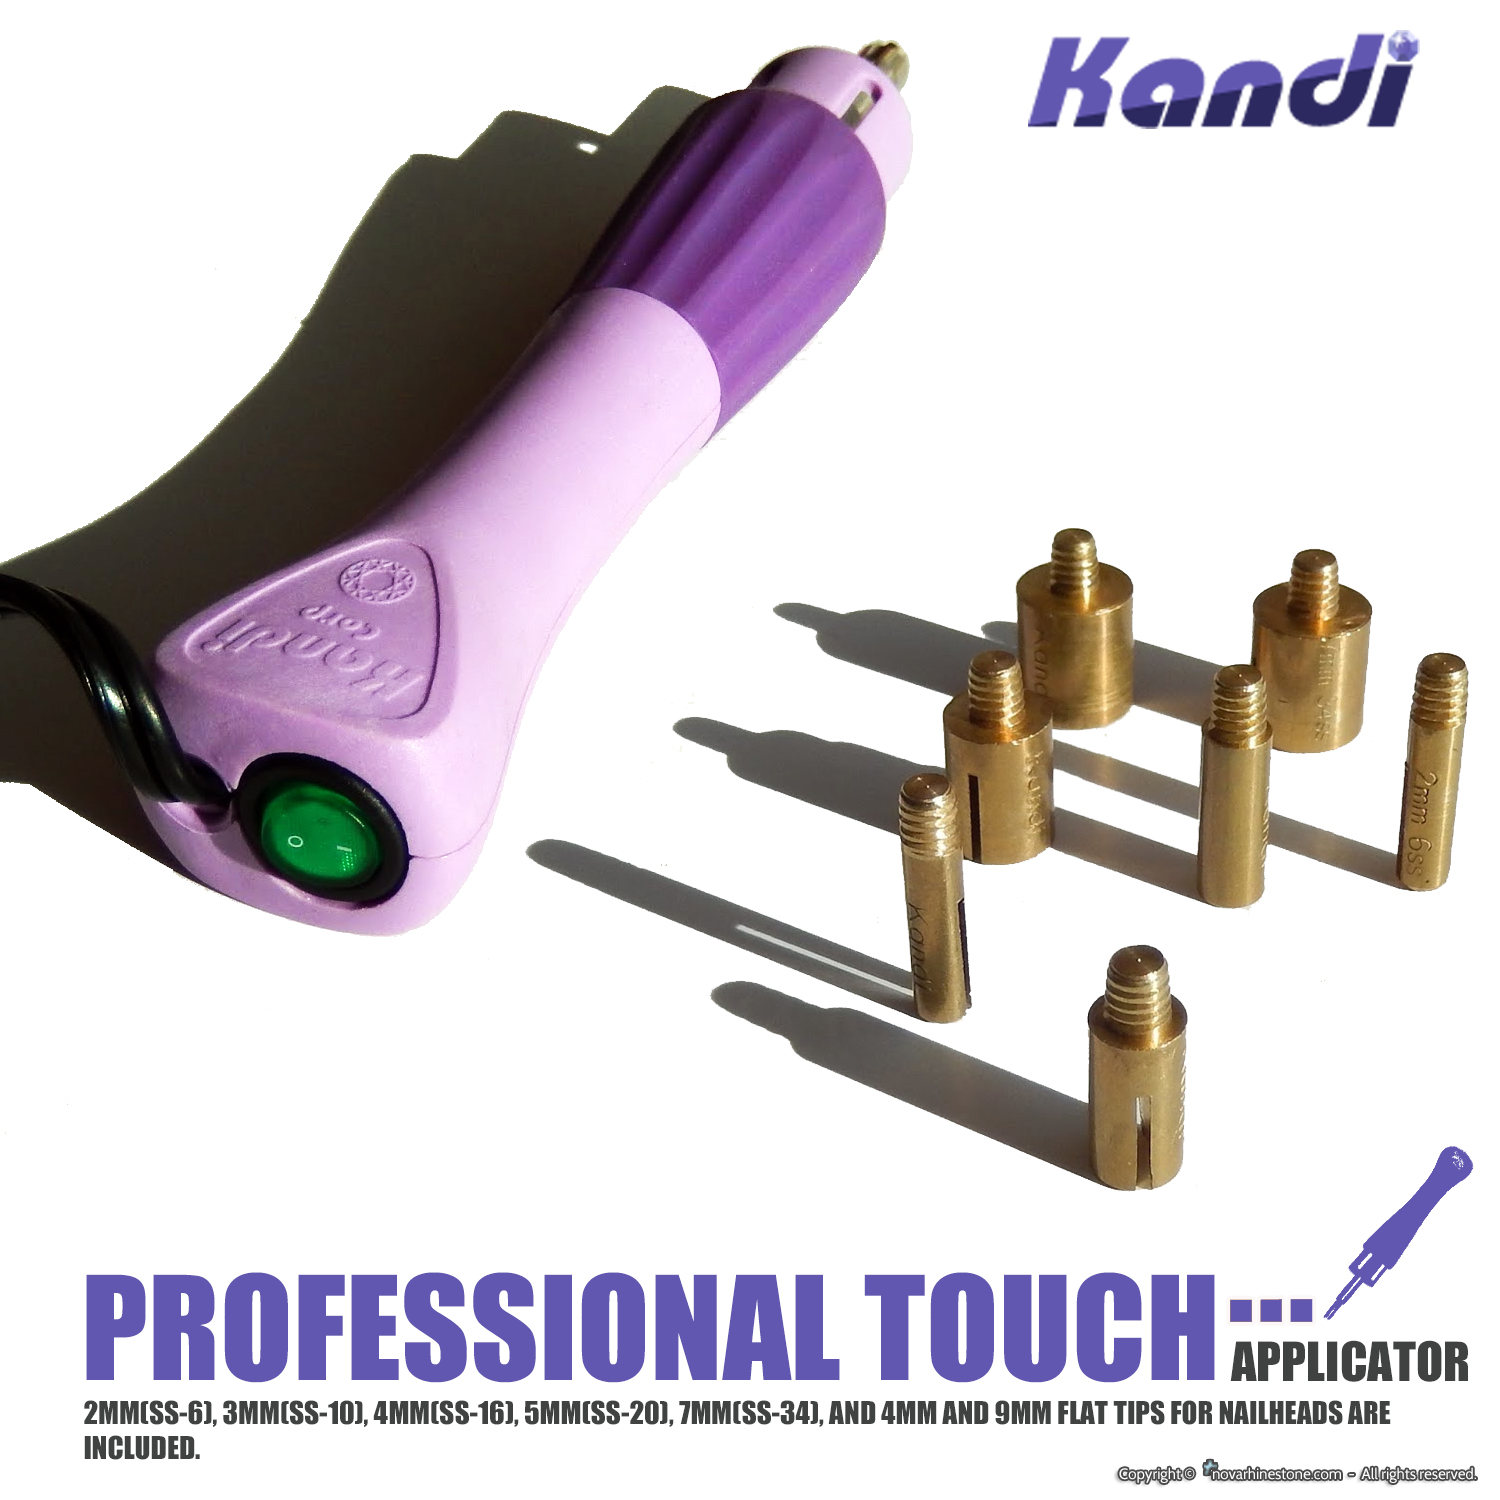 professional touch hotfix applicator